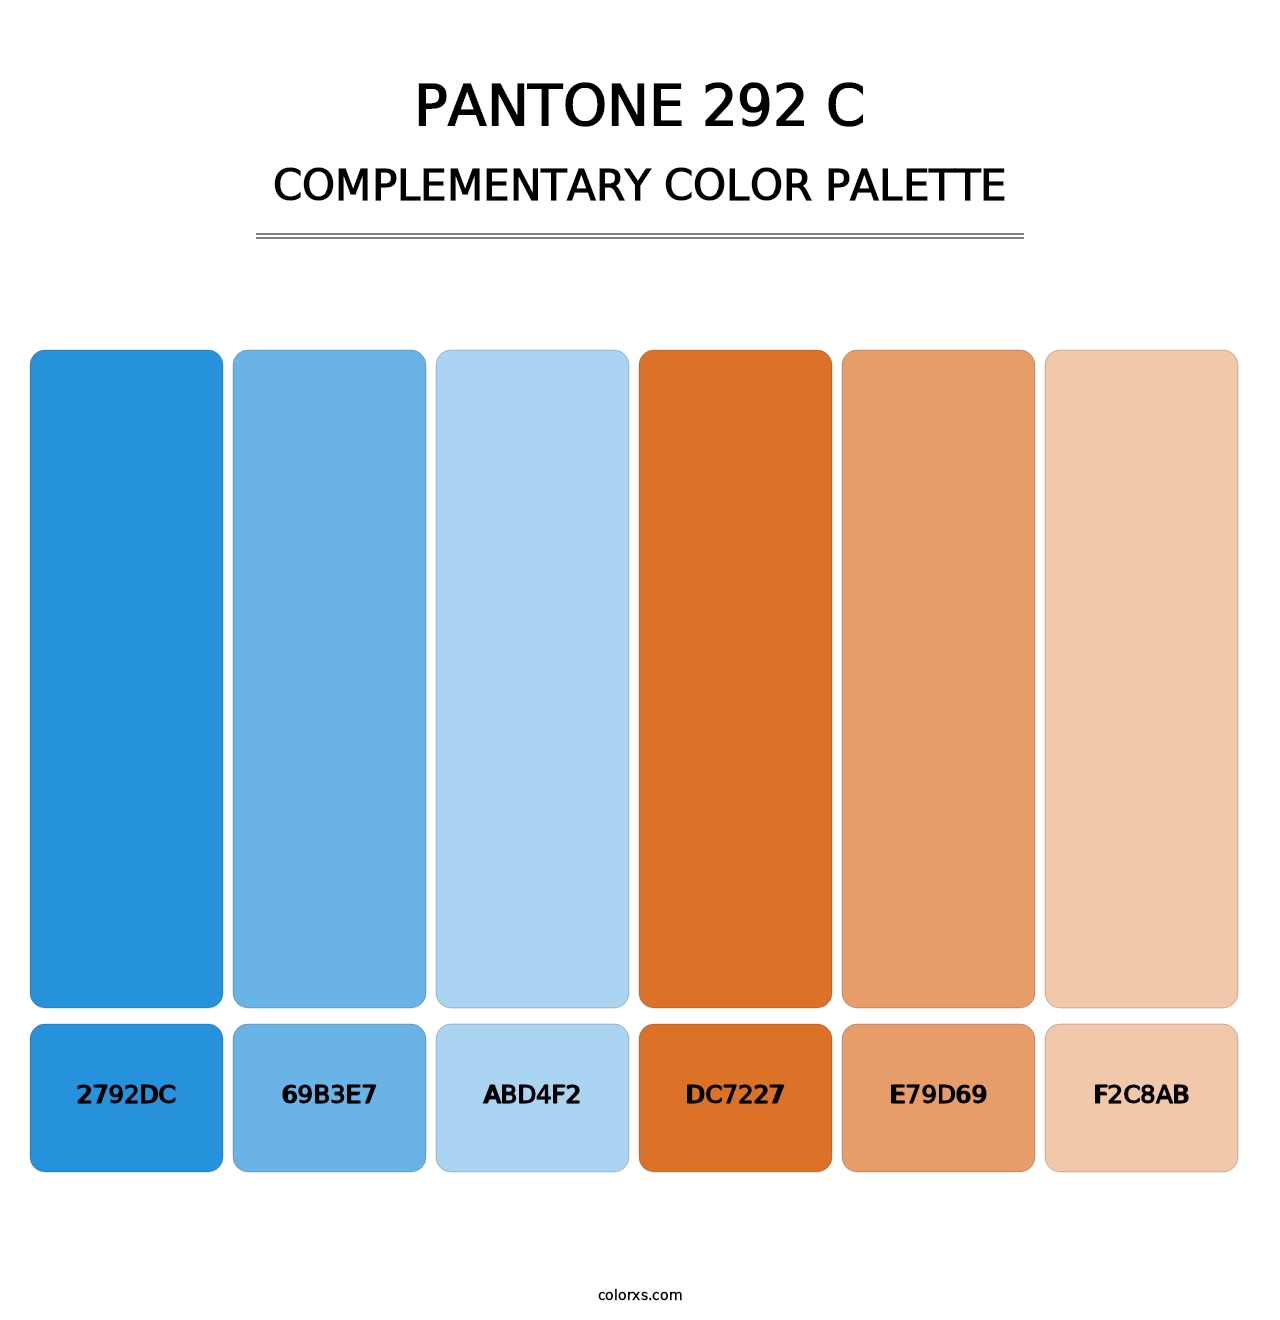 PANTONE 292 C - Complementary Color Palette